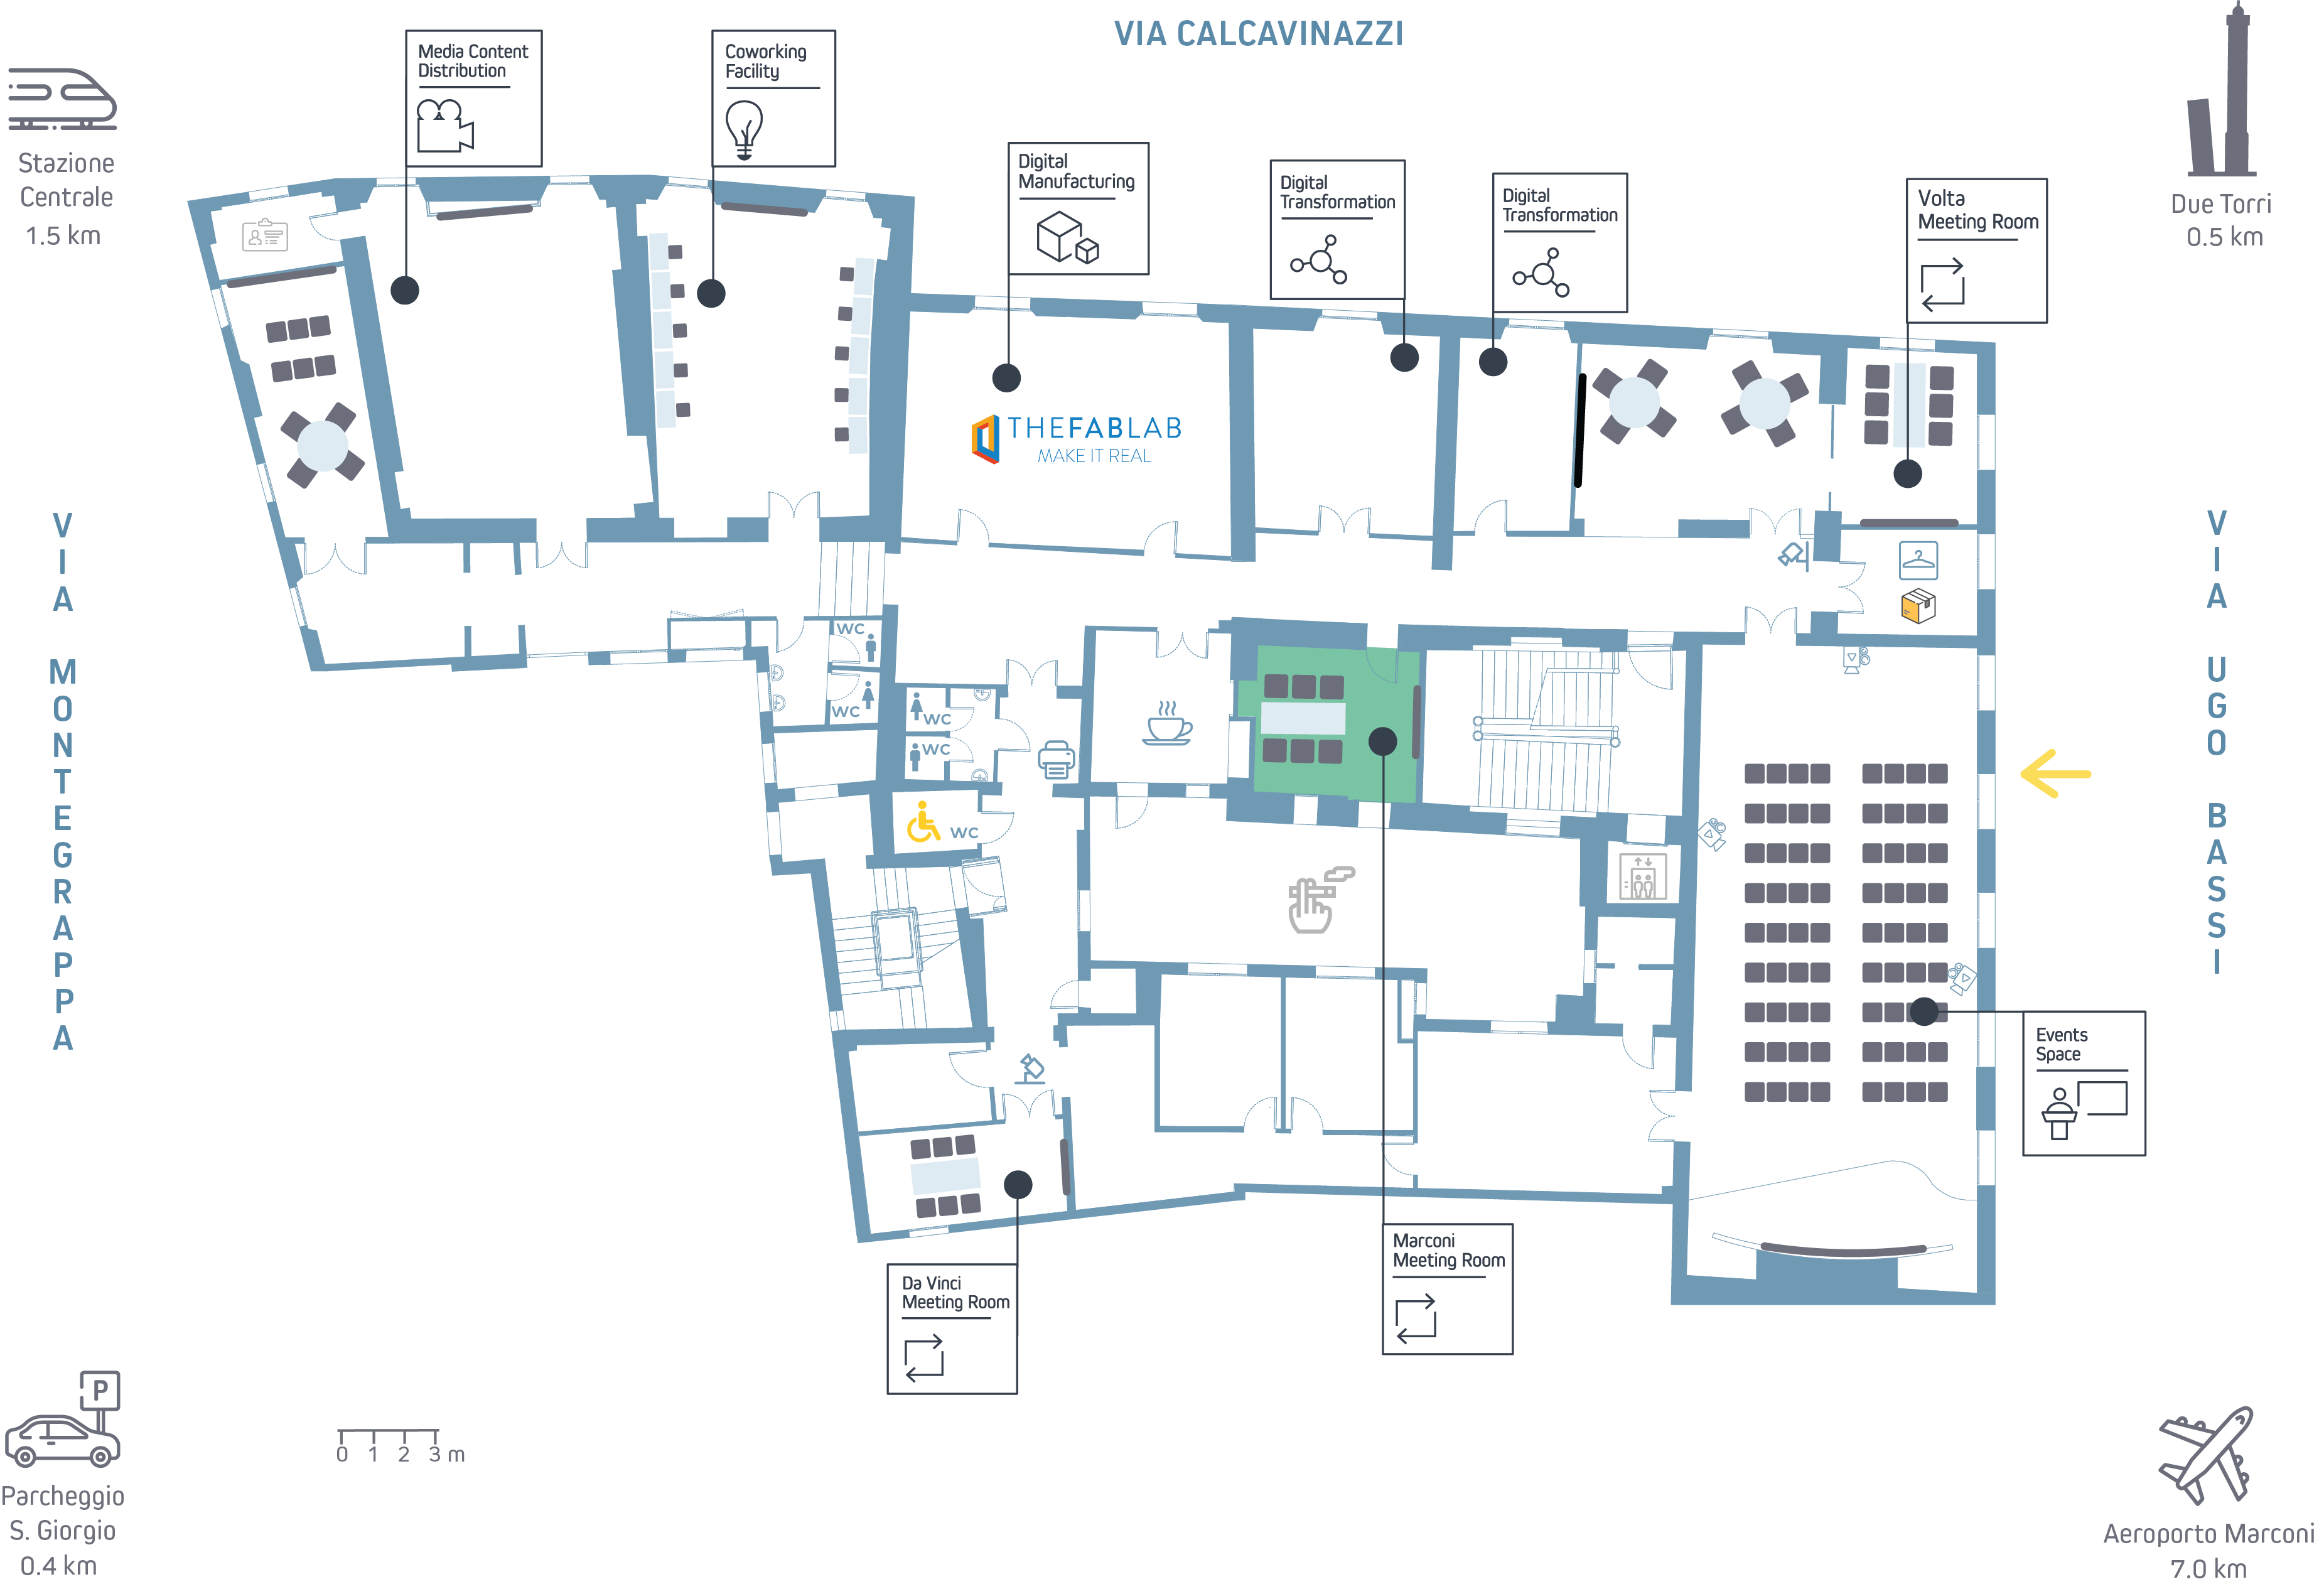 Net-Service-Digital-Hub-Floor-Map-Marconi-Meeting-Room